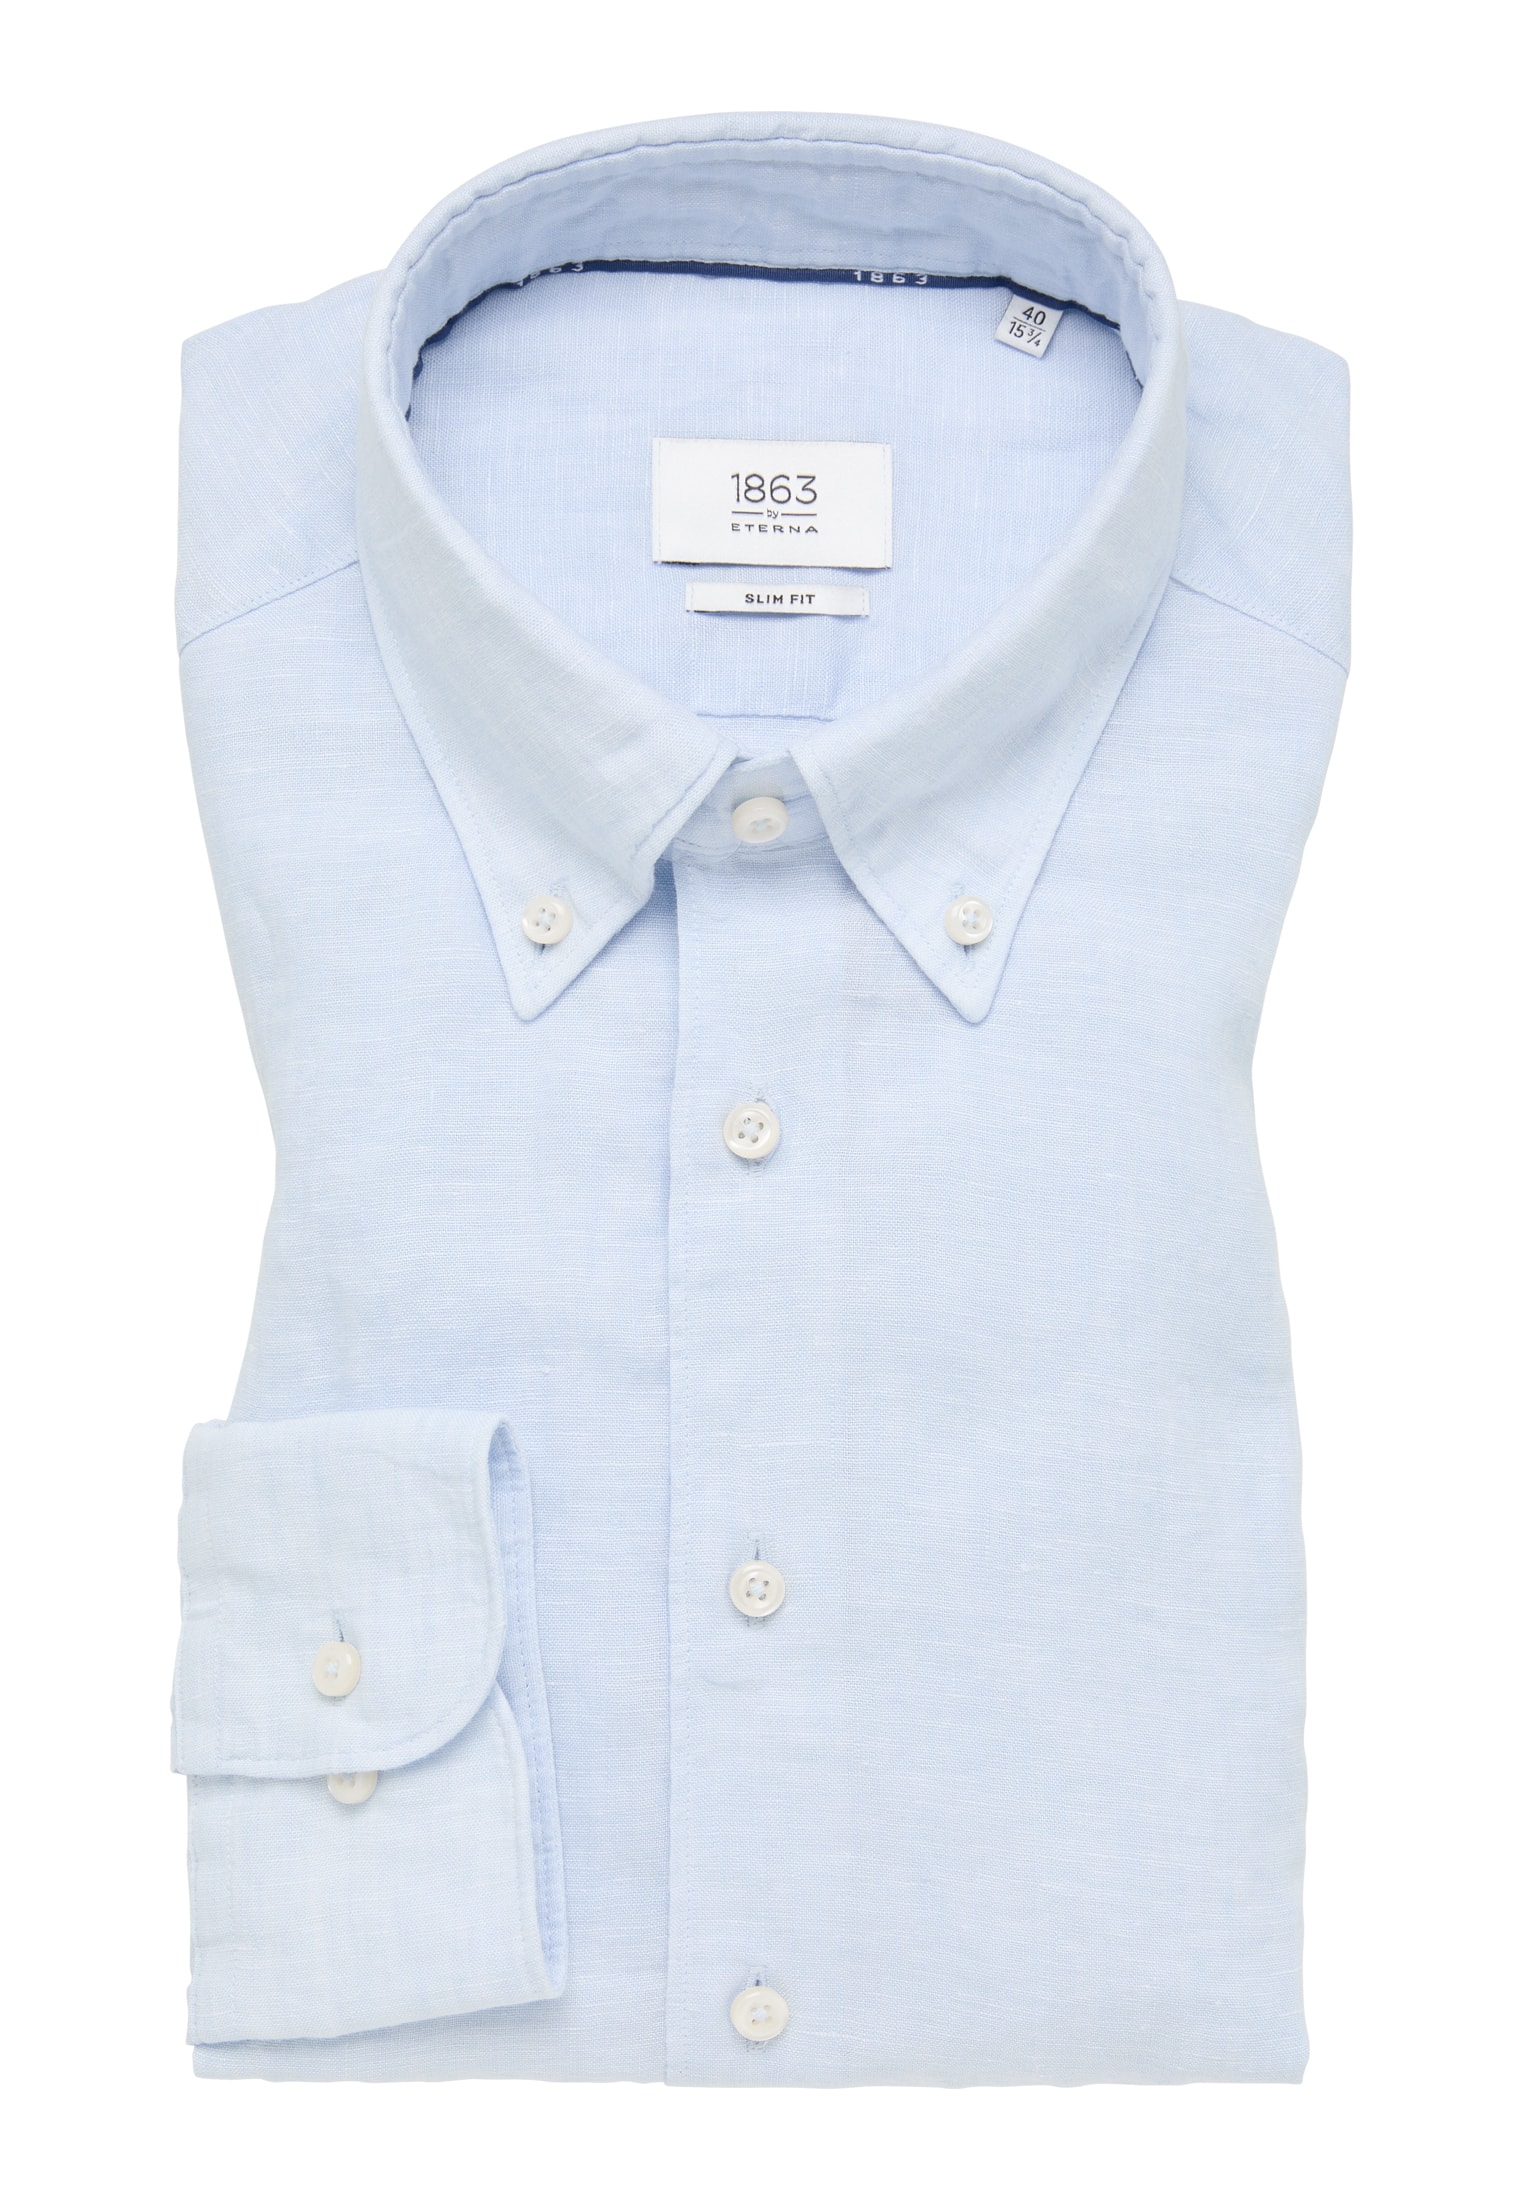 SLIM FIT Shirt 1SH11907-01-11-40-1/1 long blue sleeve blue | light | | | light in 40 plain